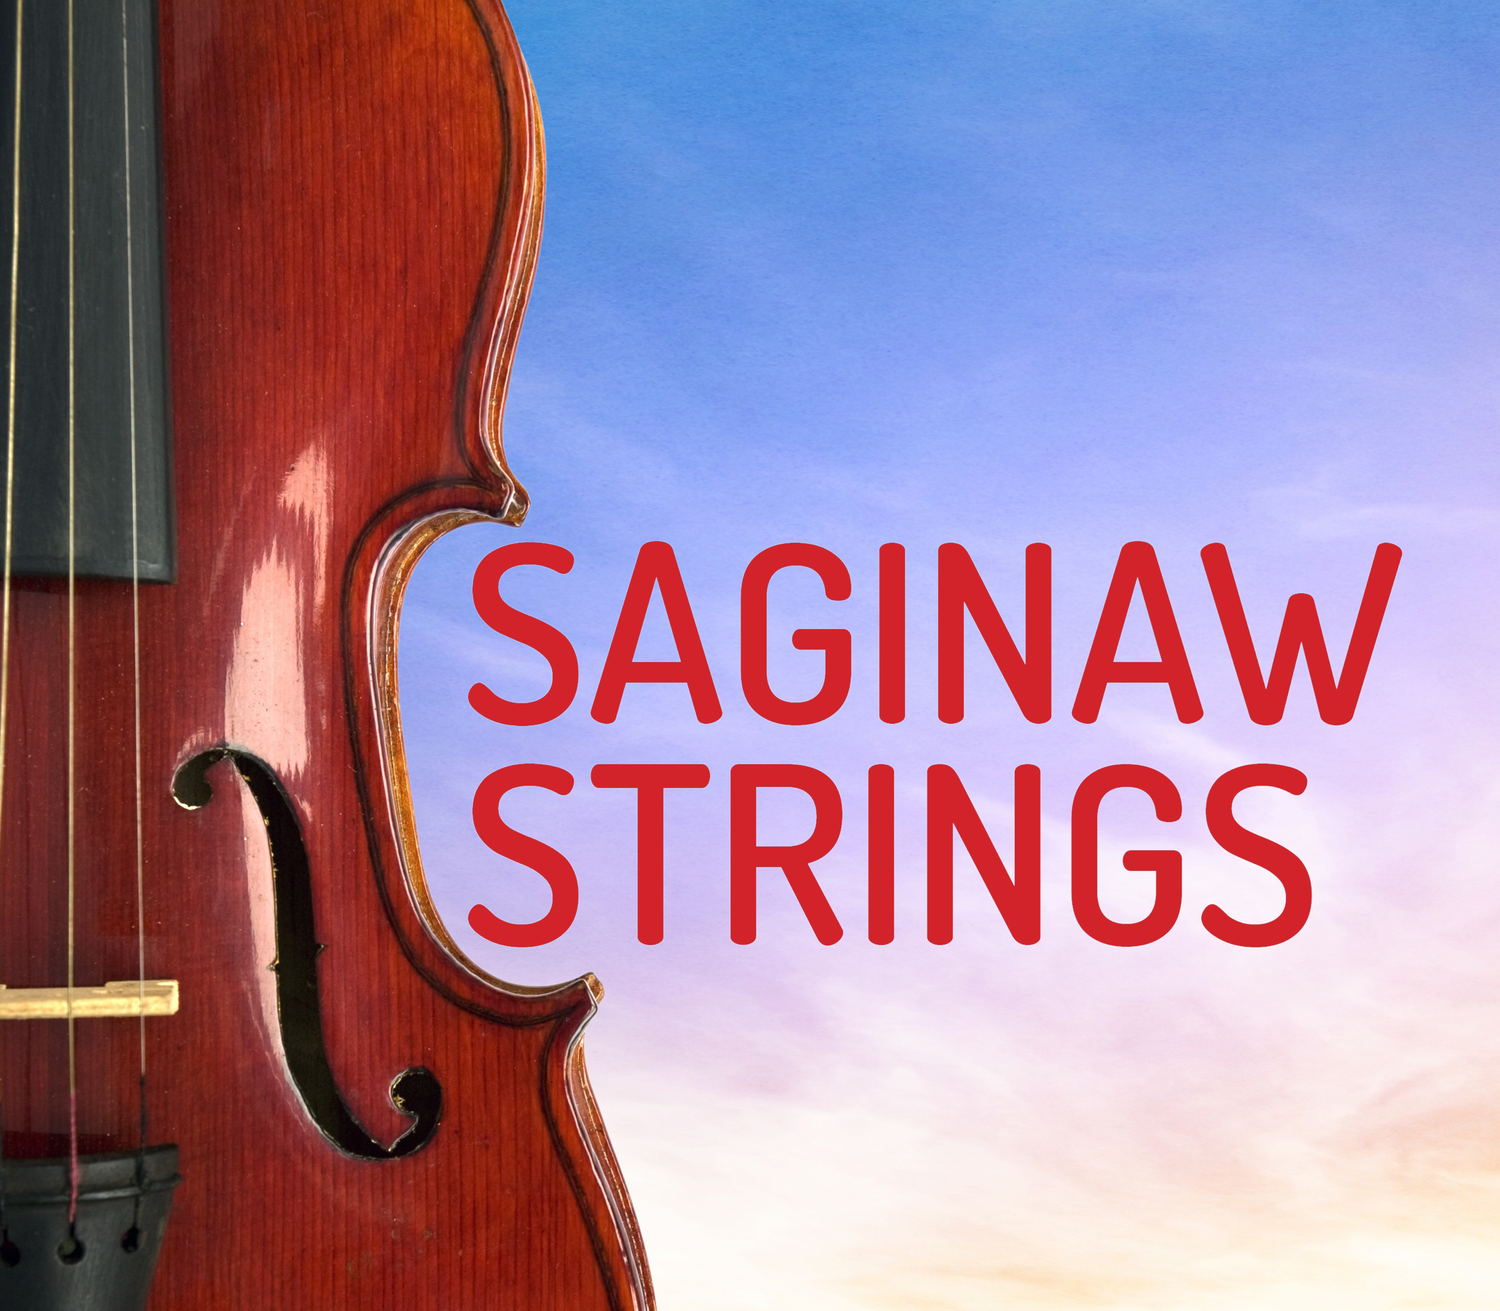 Saginaw Strings